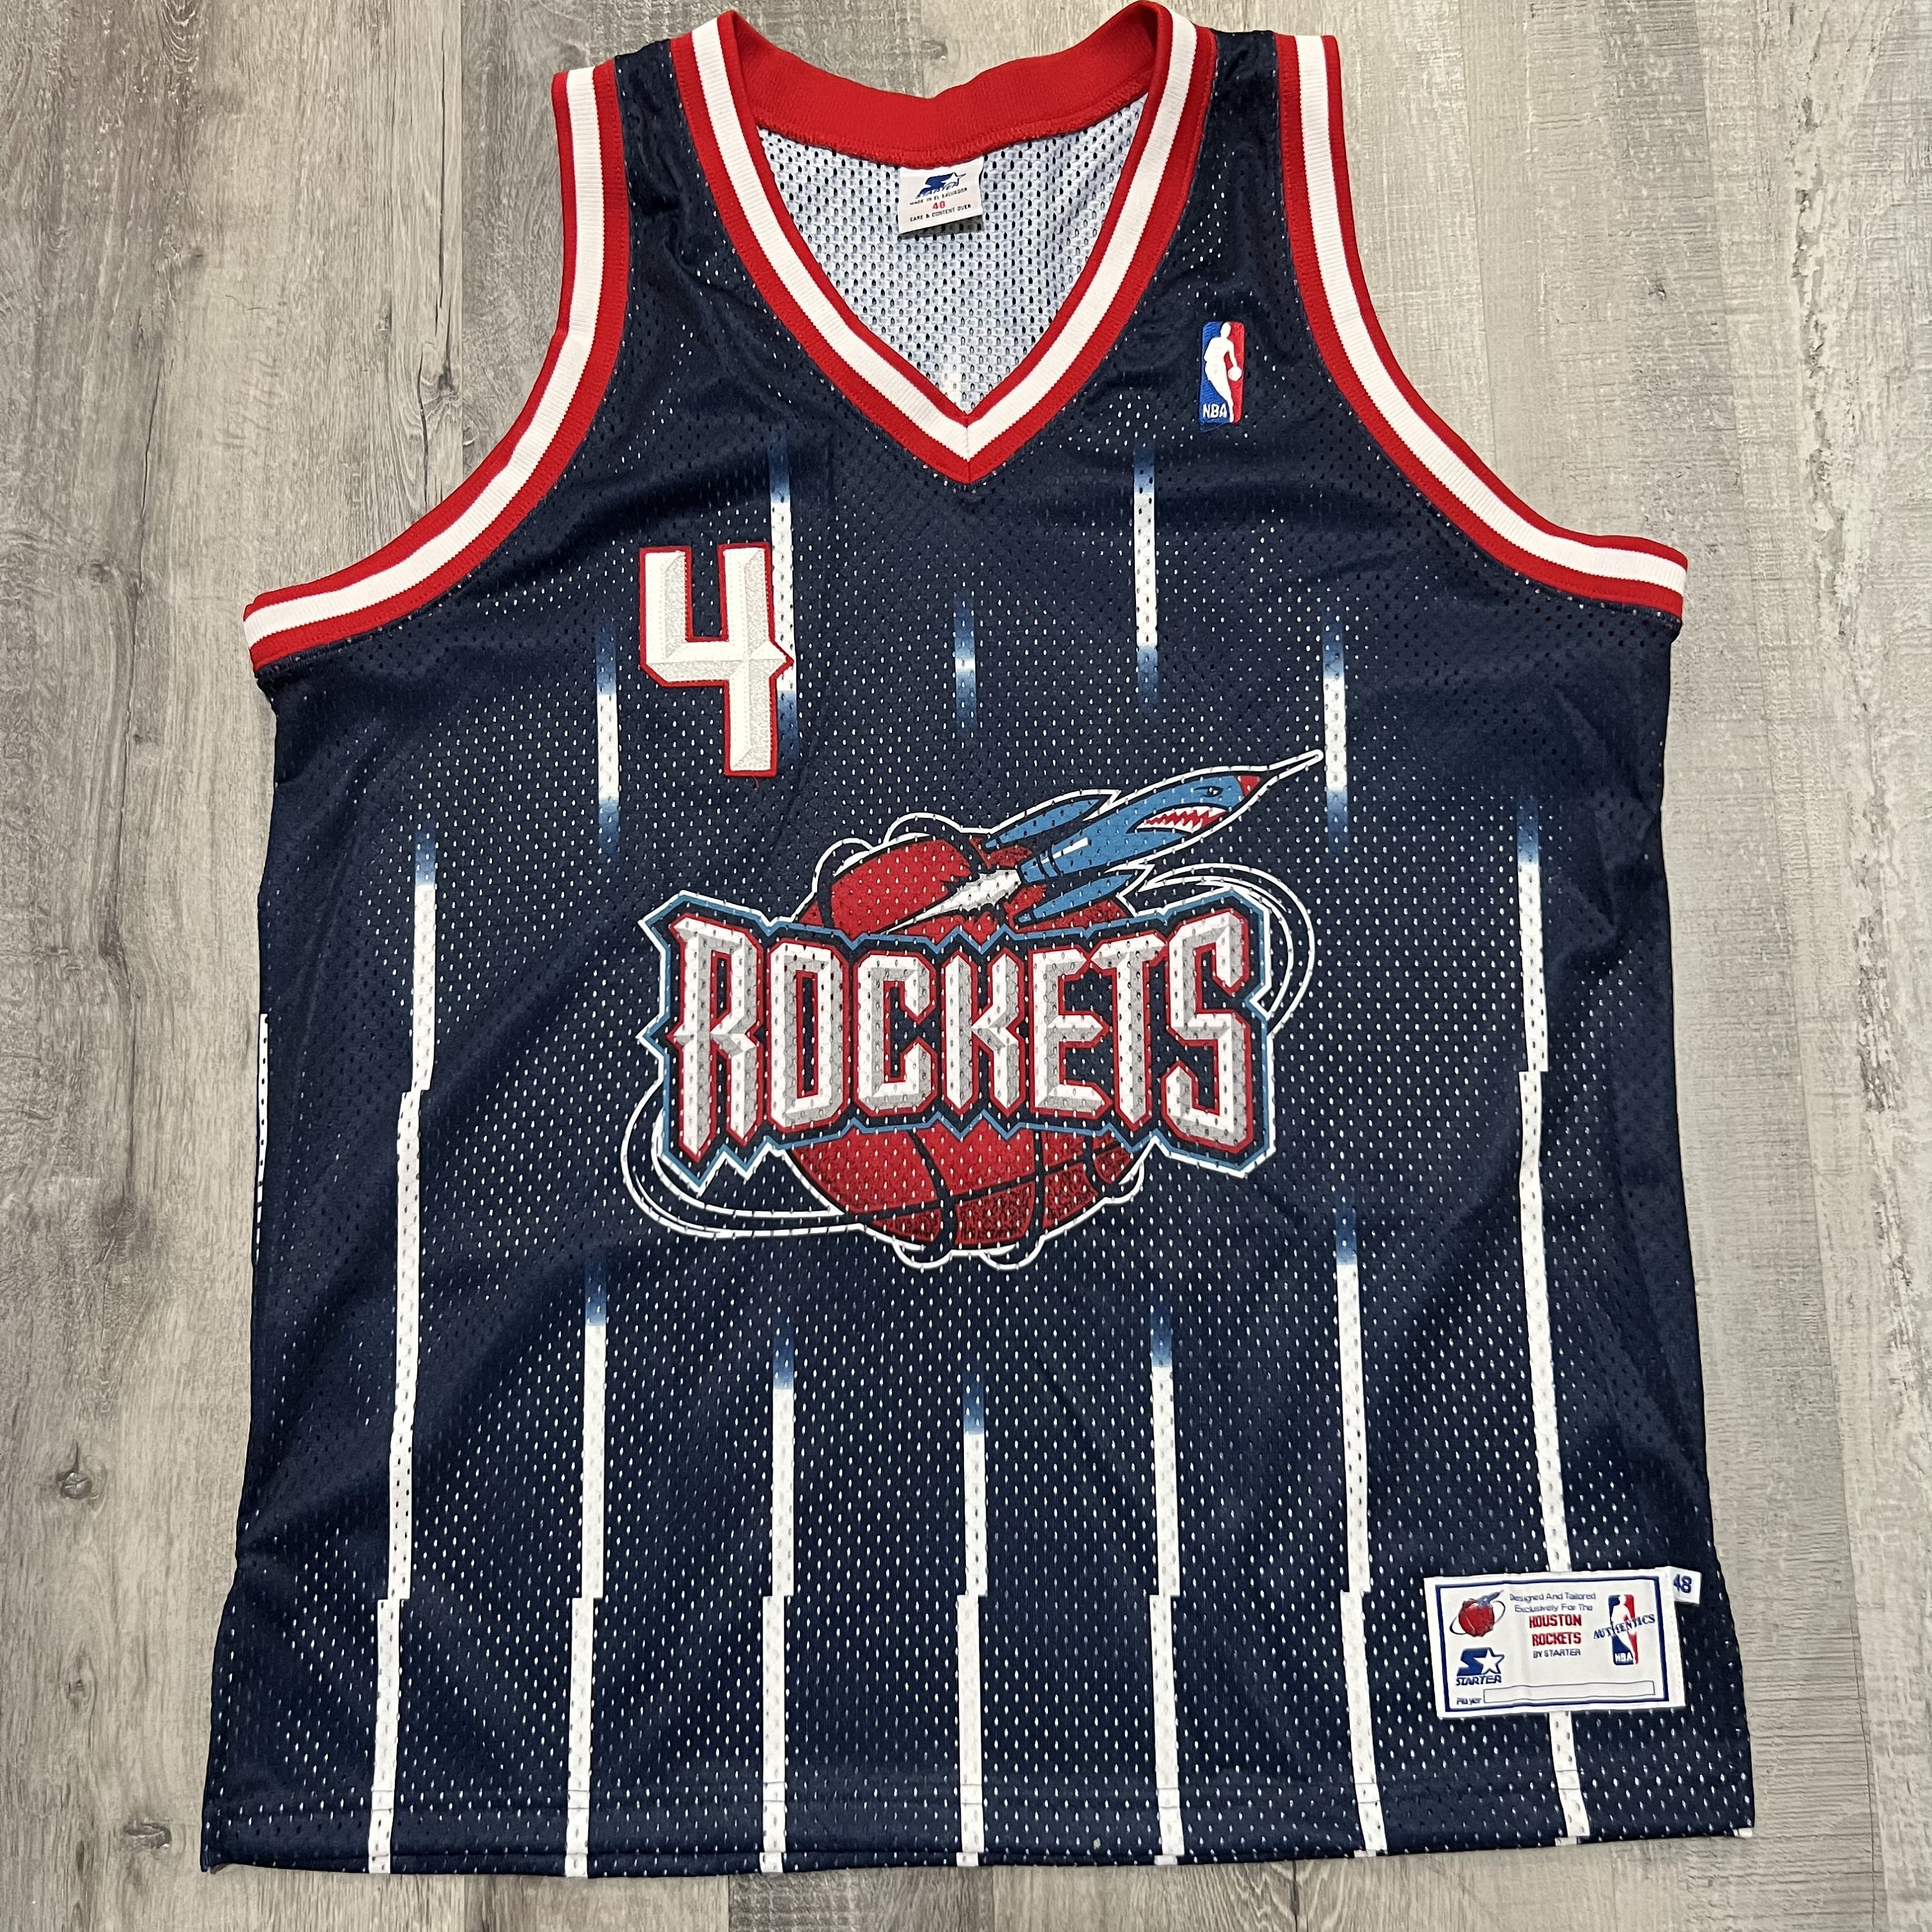 90's Charles Barkley Houston Rockets Champion NBA Jersey Size 48 XL – Rare  VNTG